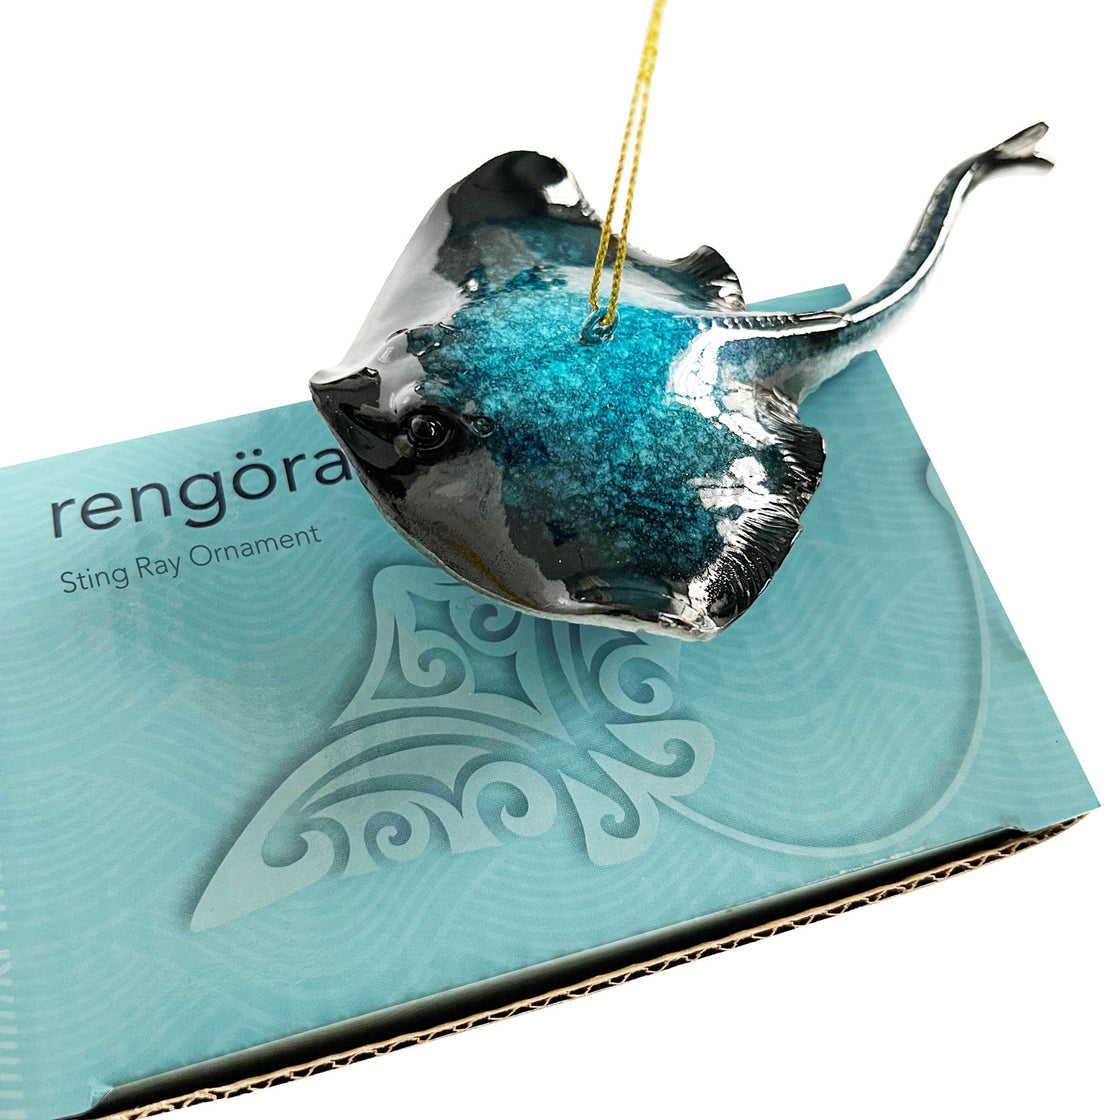 rengöra elegant blue stingray ornament gracefully seated on its stylish packaging